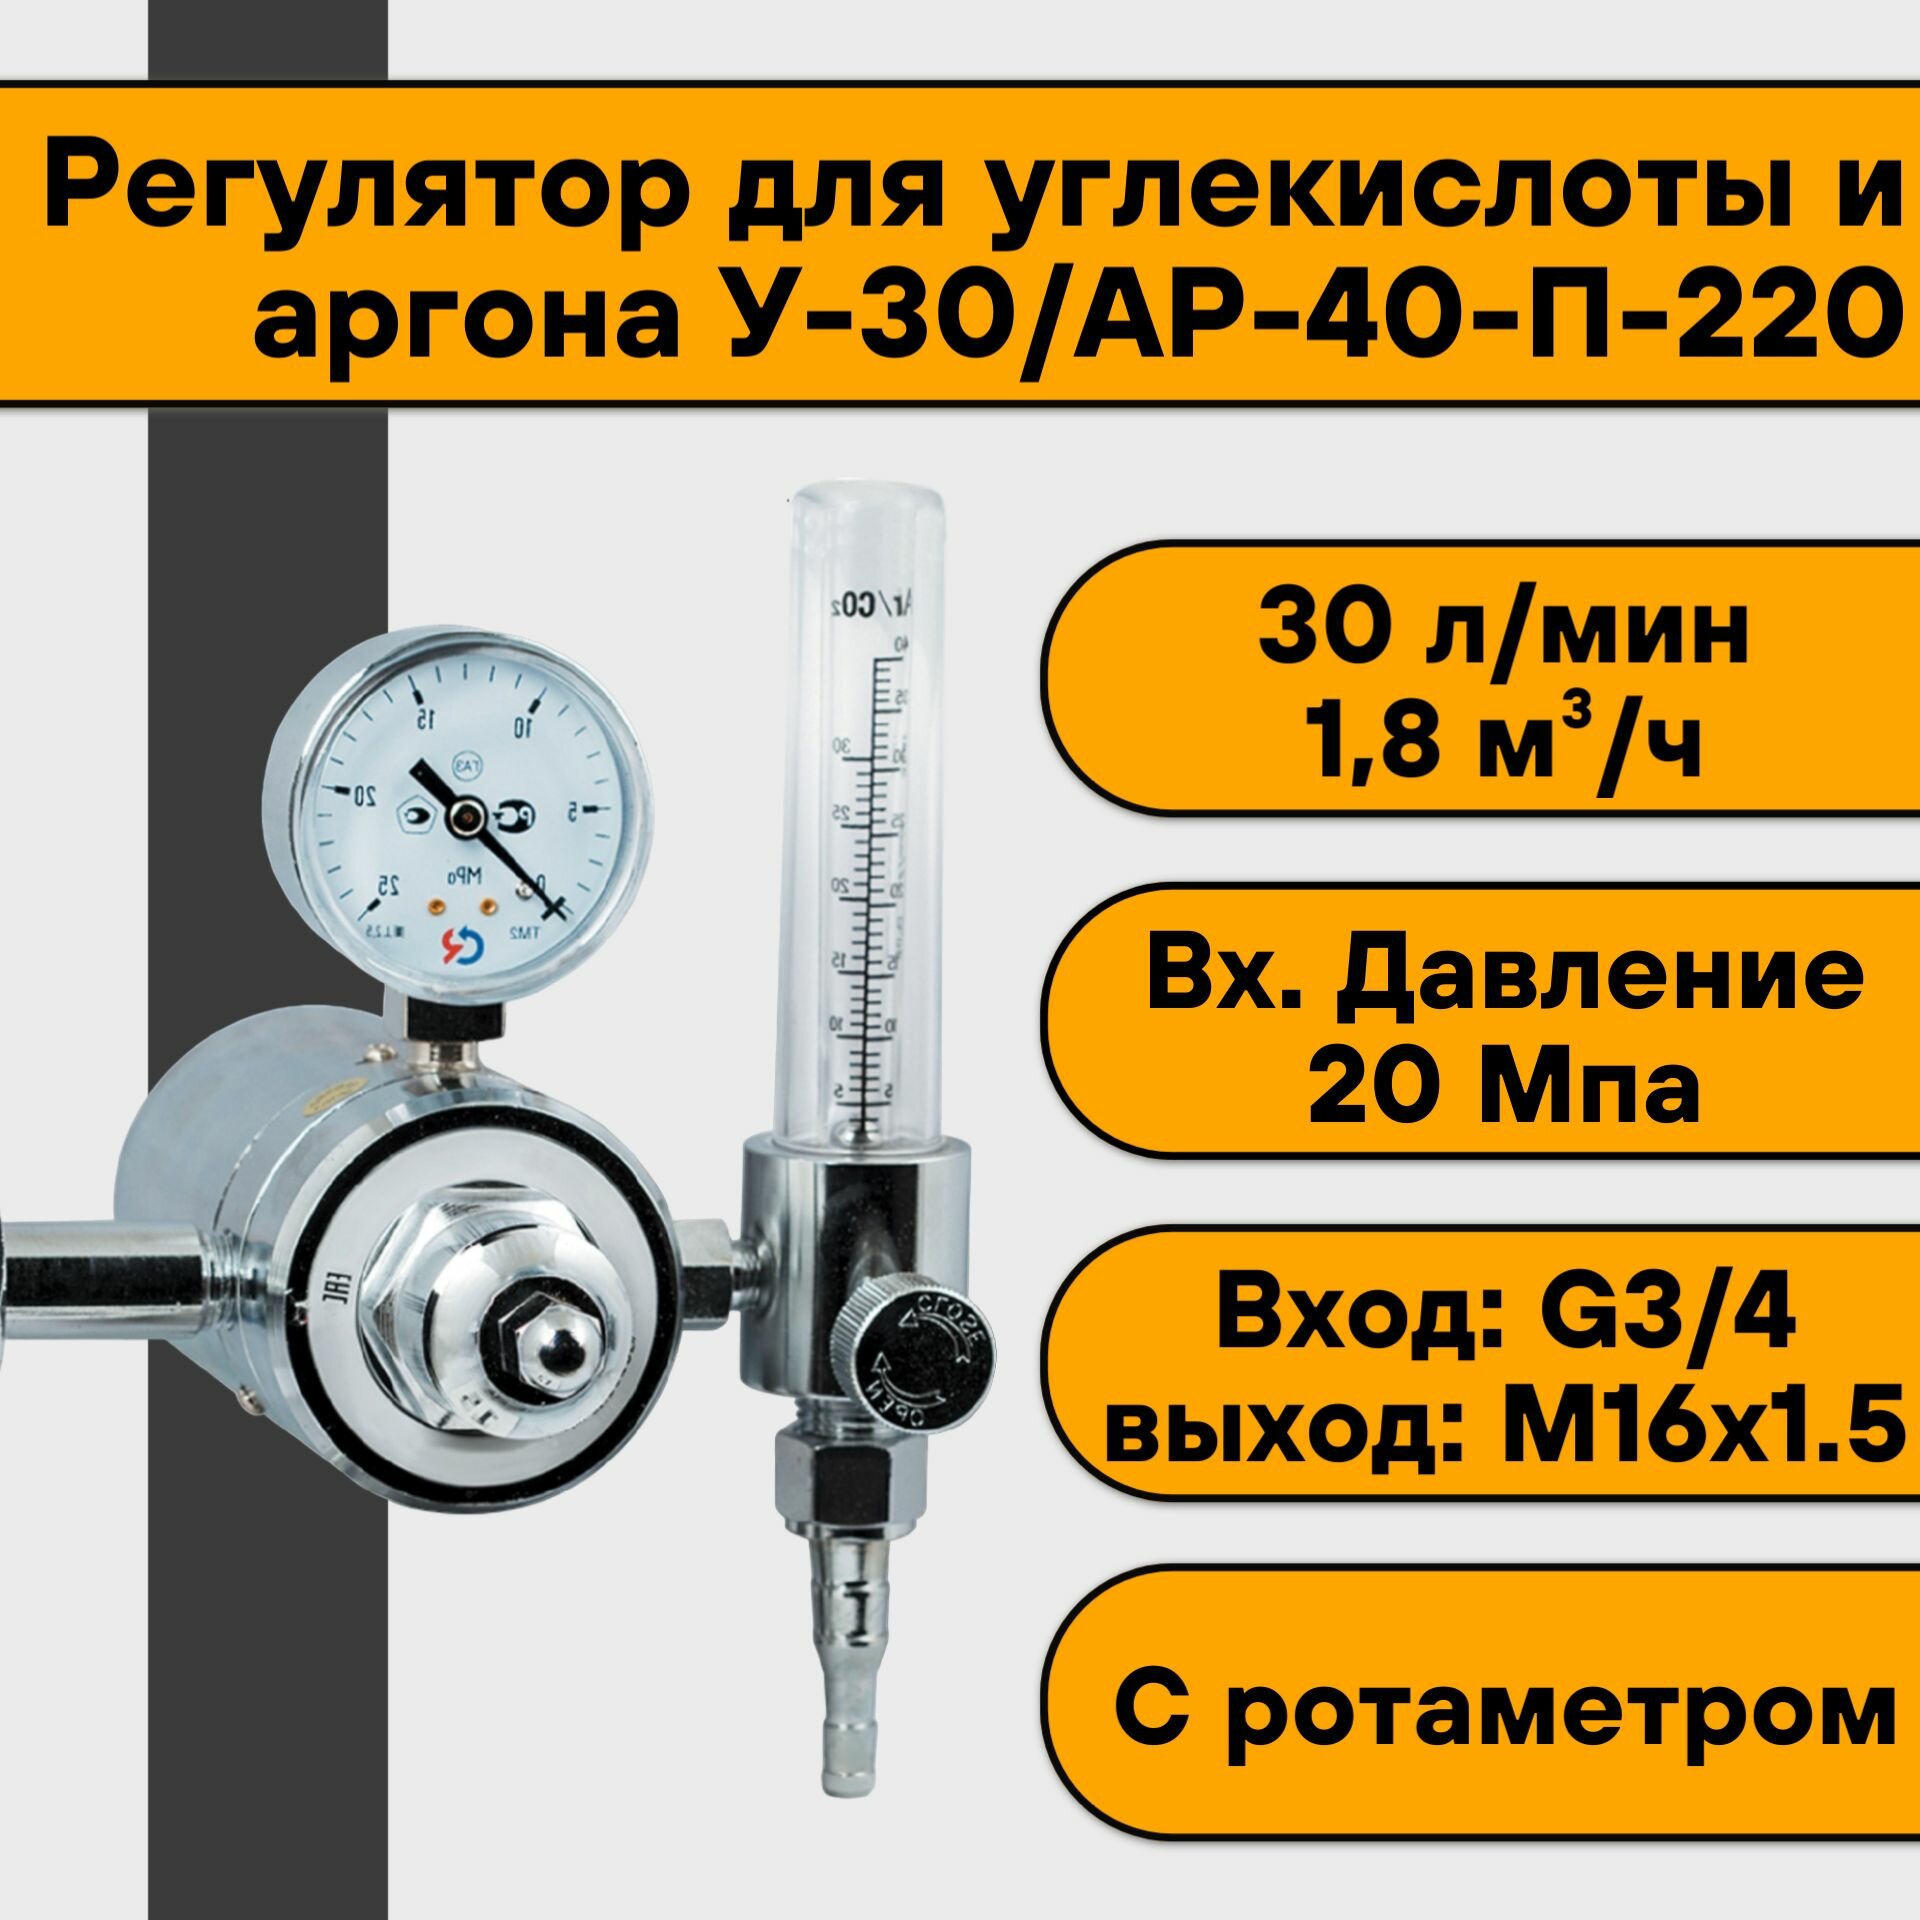 Регулятор для углекислоты и аргона У-30/АР-40-П-220 (с подогревателем+ротаметр)